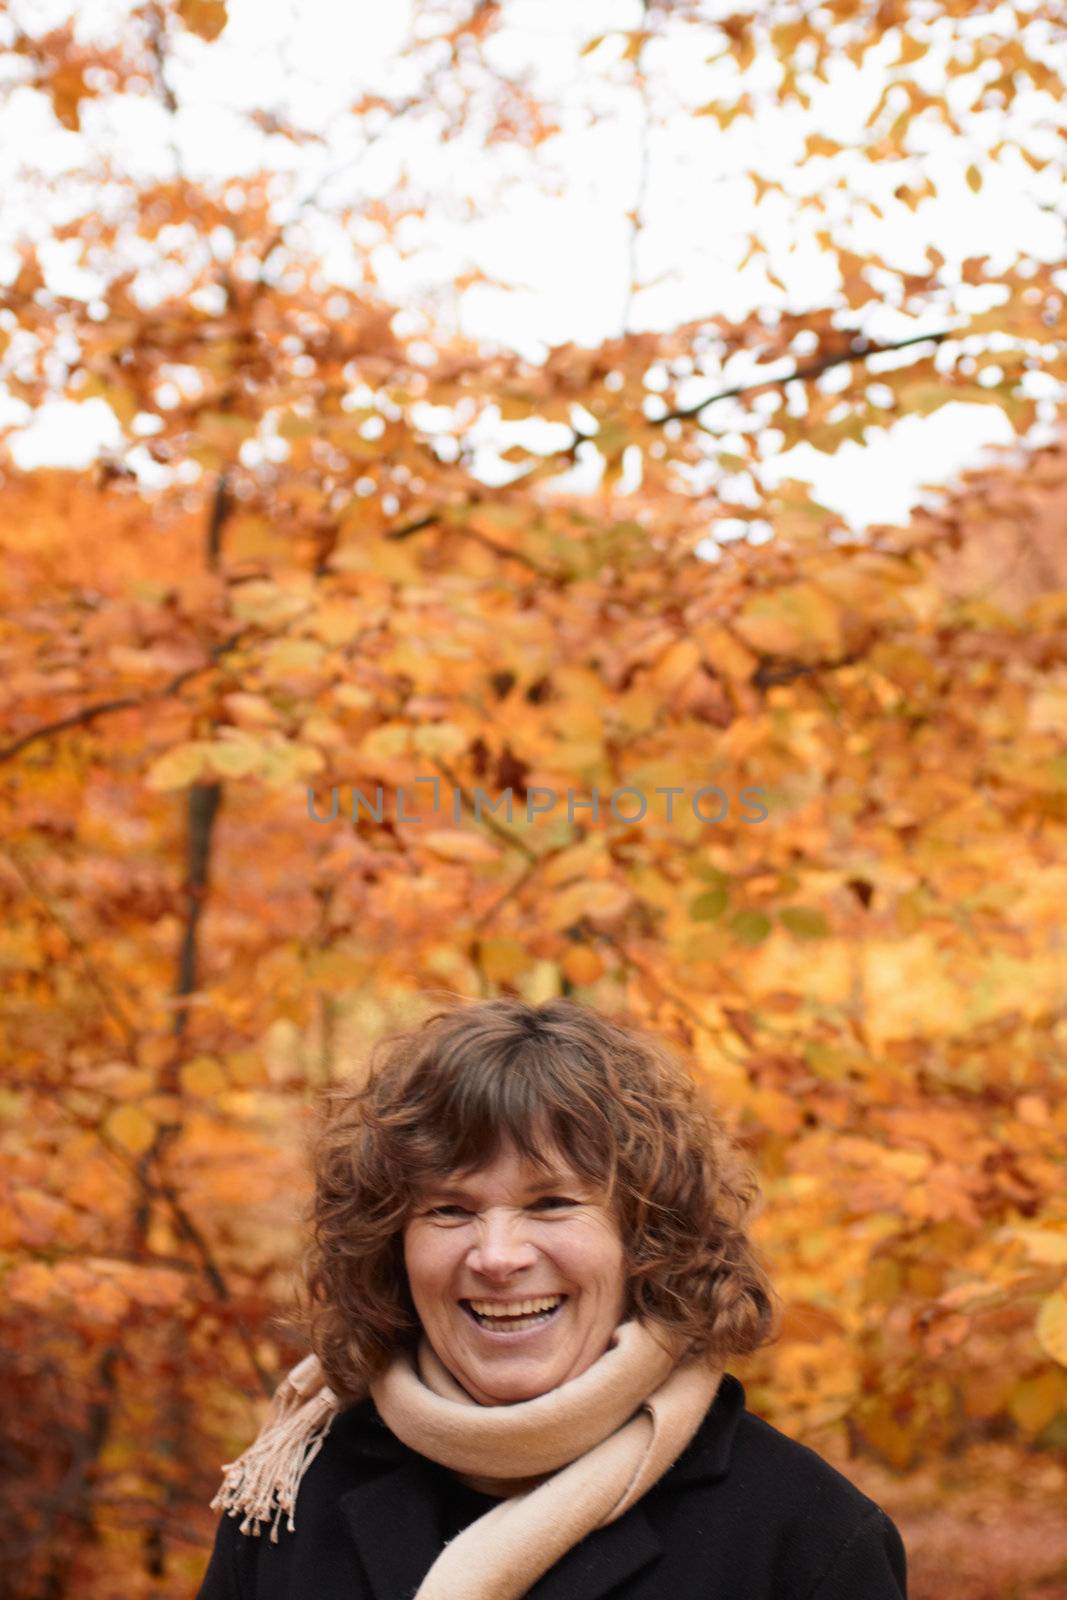 Autumn - Joyful middle aged woman laughing